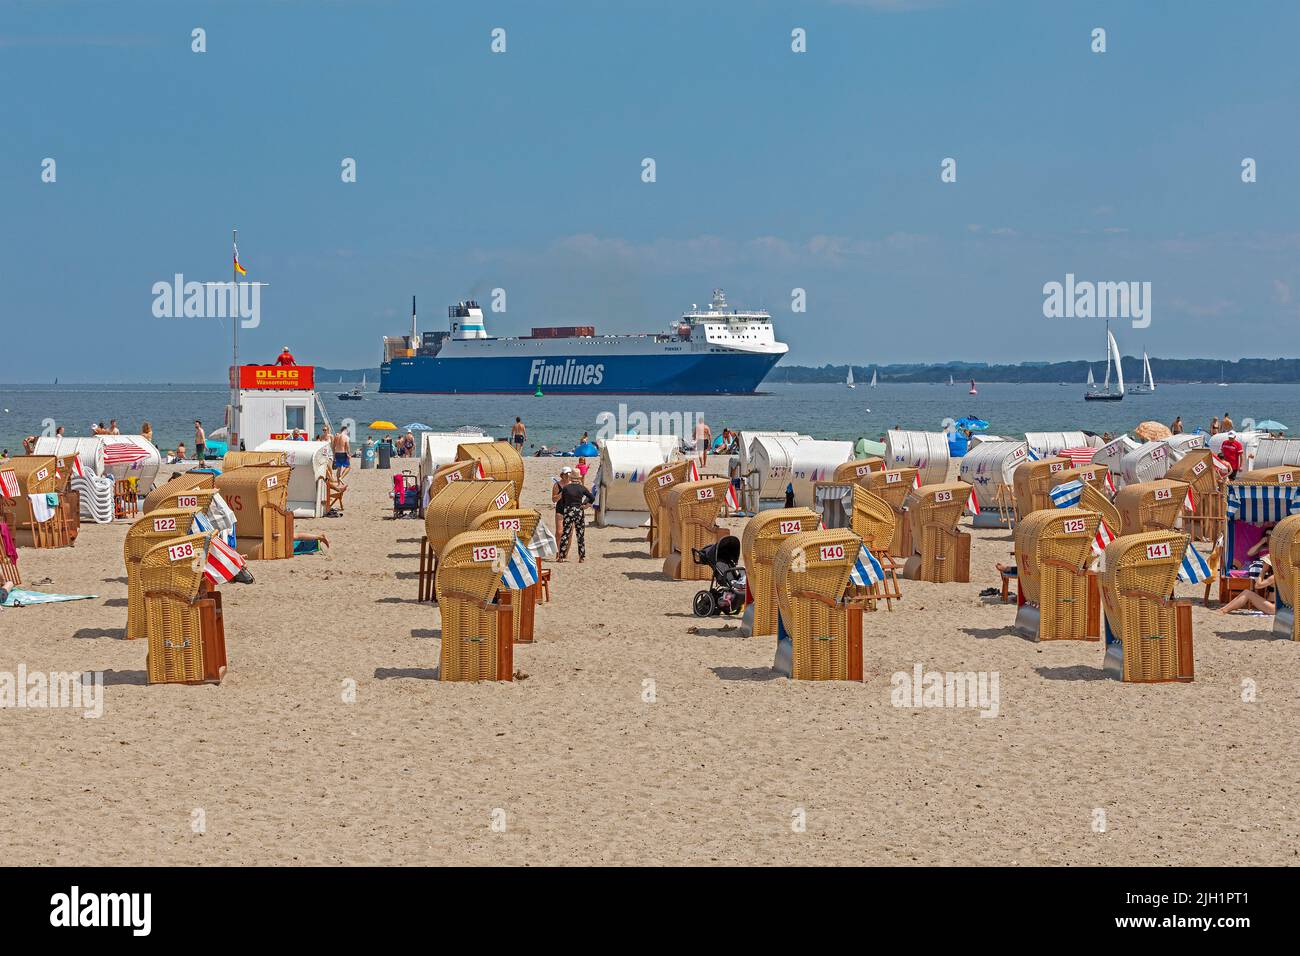 Lifeguard tower, beach chairs, Finnlines Ferry, beach, Travemünde, Lübeck, Schleswig-Holstein, Germany Stock Photo